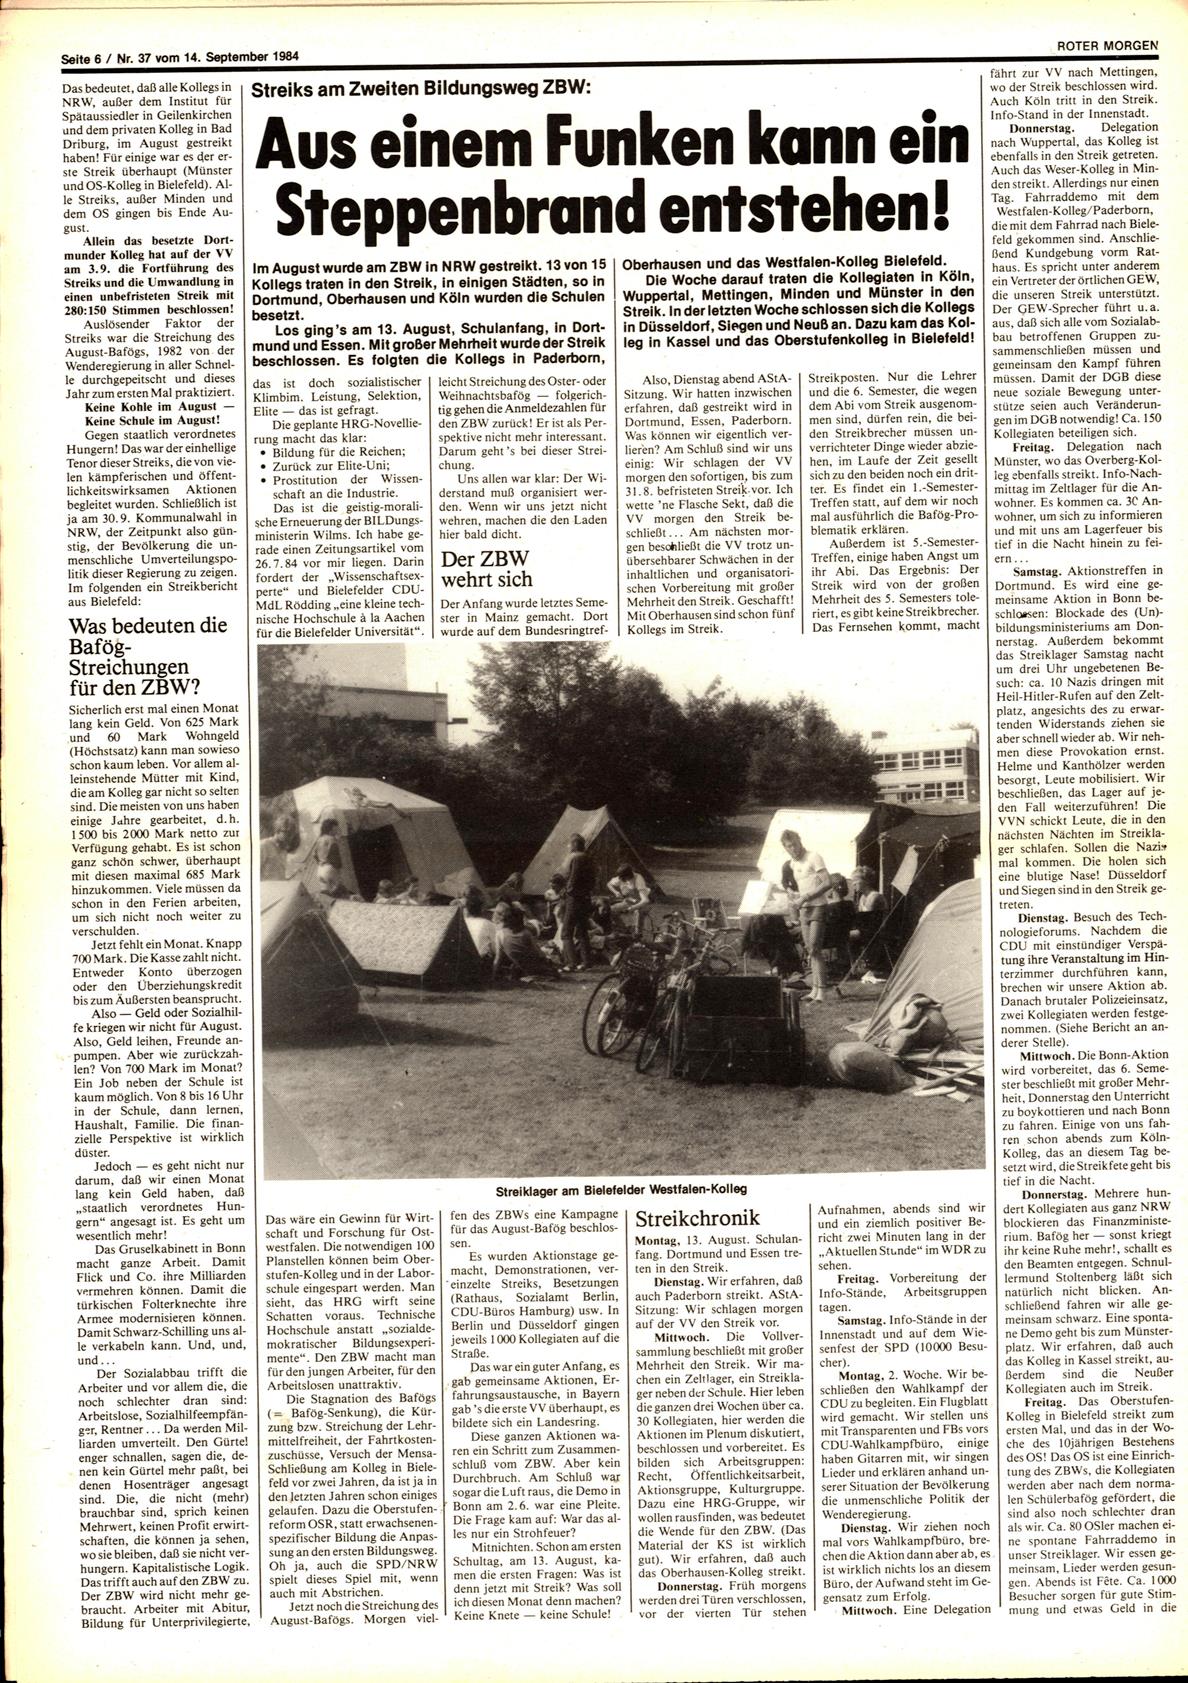 Roter Morgen, 18. Jg., 14. September 1984, Nr. 37, Seite 6